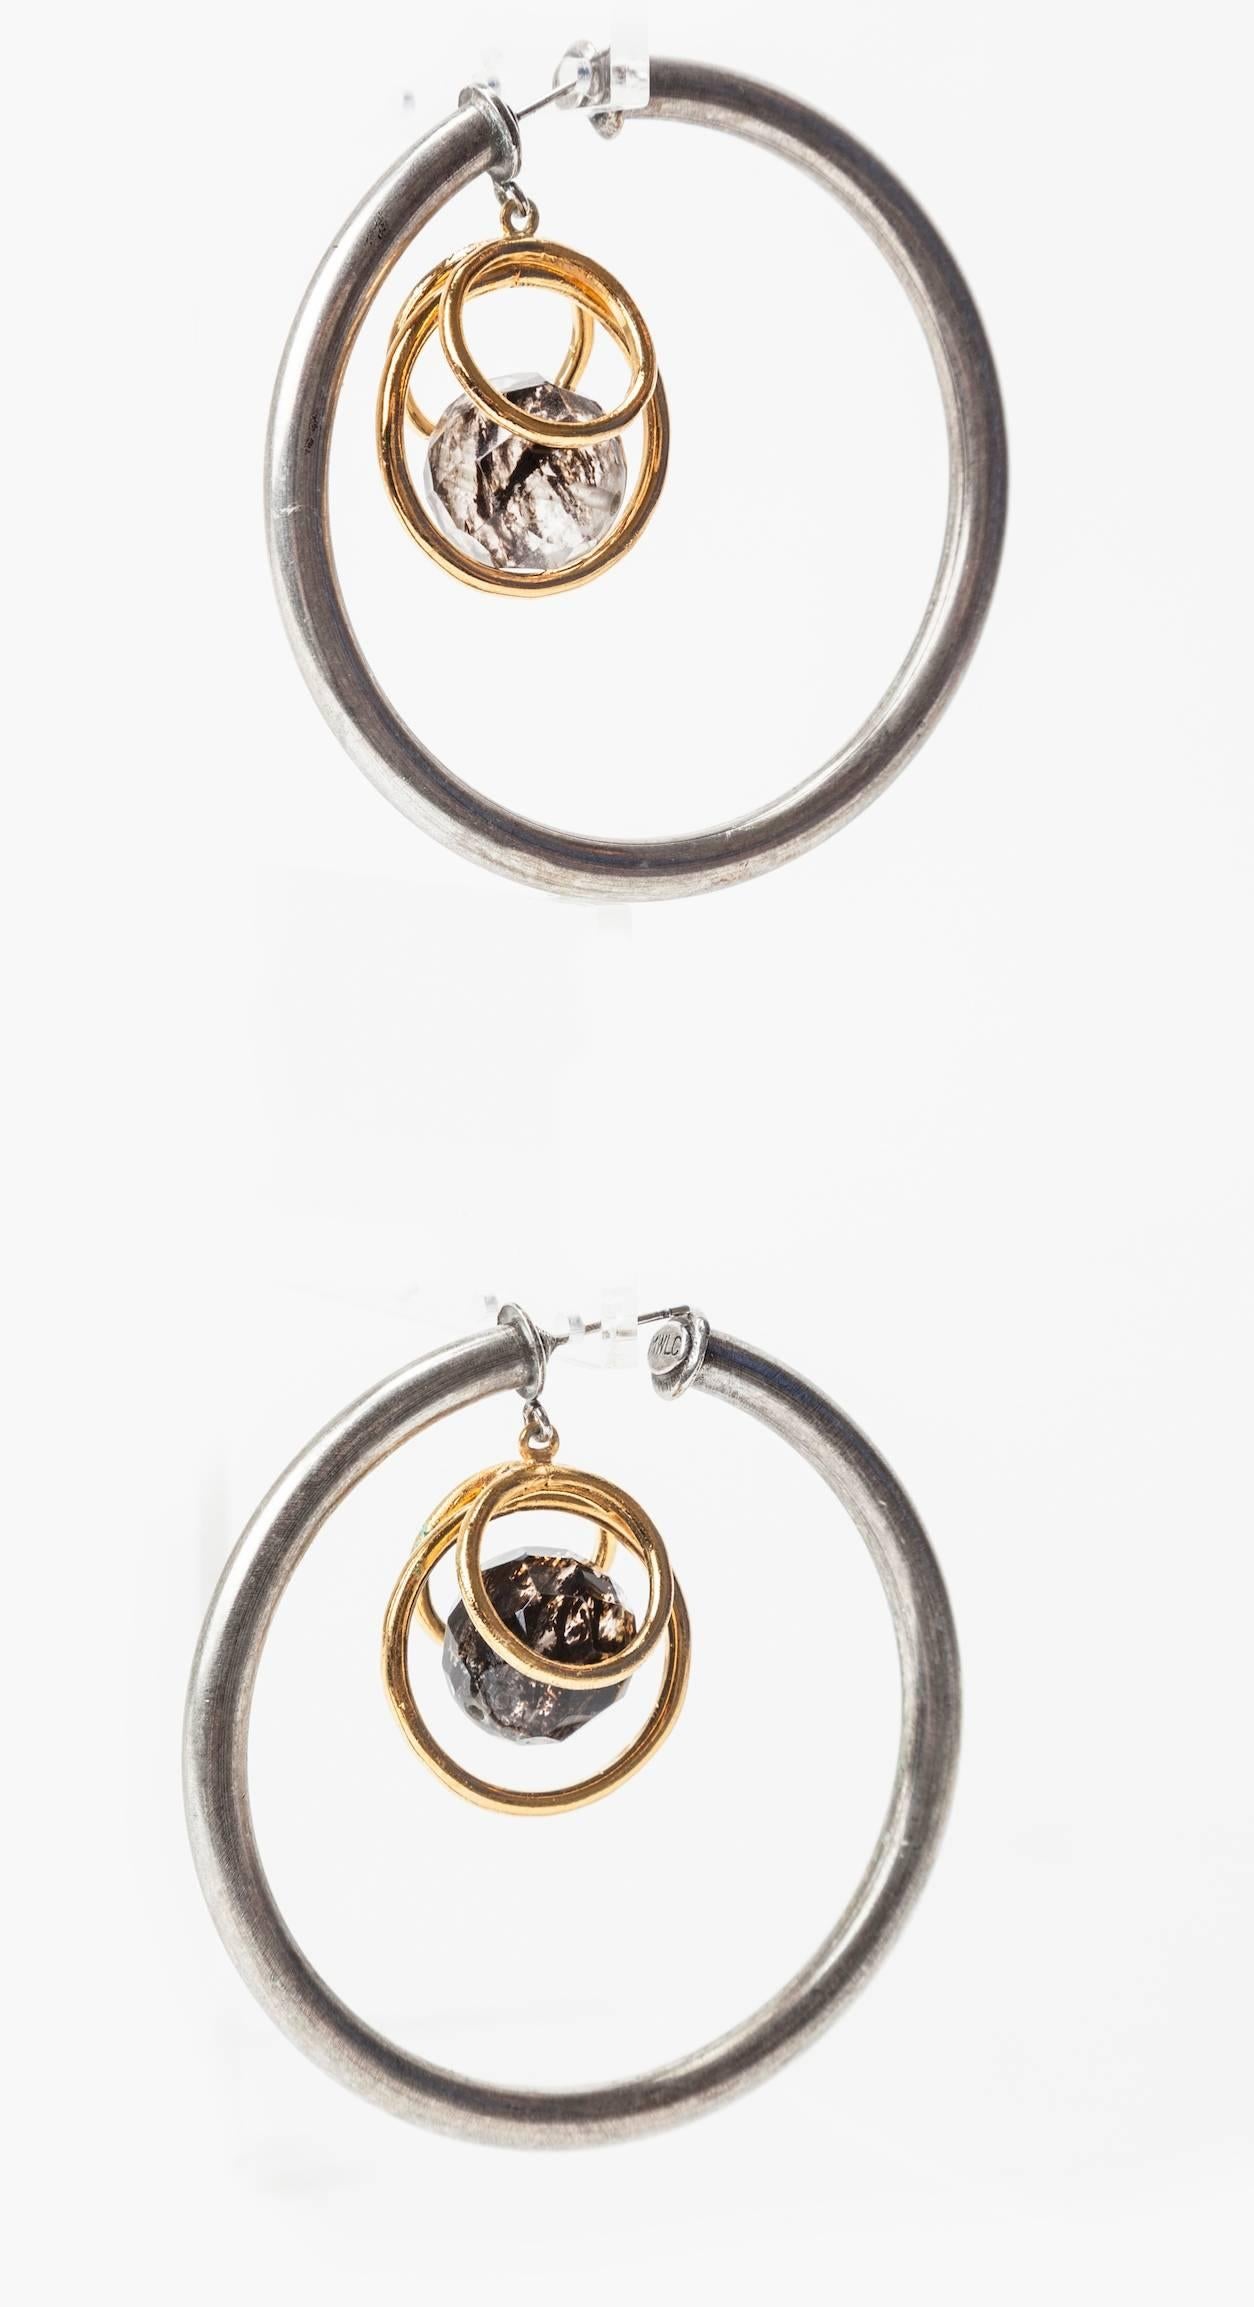 Oversized Orbit Hoop earrings in silver toned metal, suspending a faceted rutilated quartz bead in gilt hoop settings. 
Made in Parisian studios of Mark Walsh Leslie Chin. 21 Century.
Excellent condition. Hoop 2.75